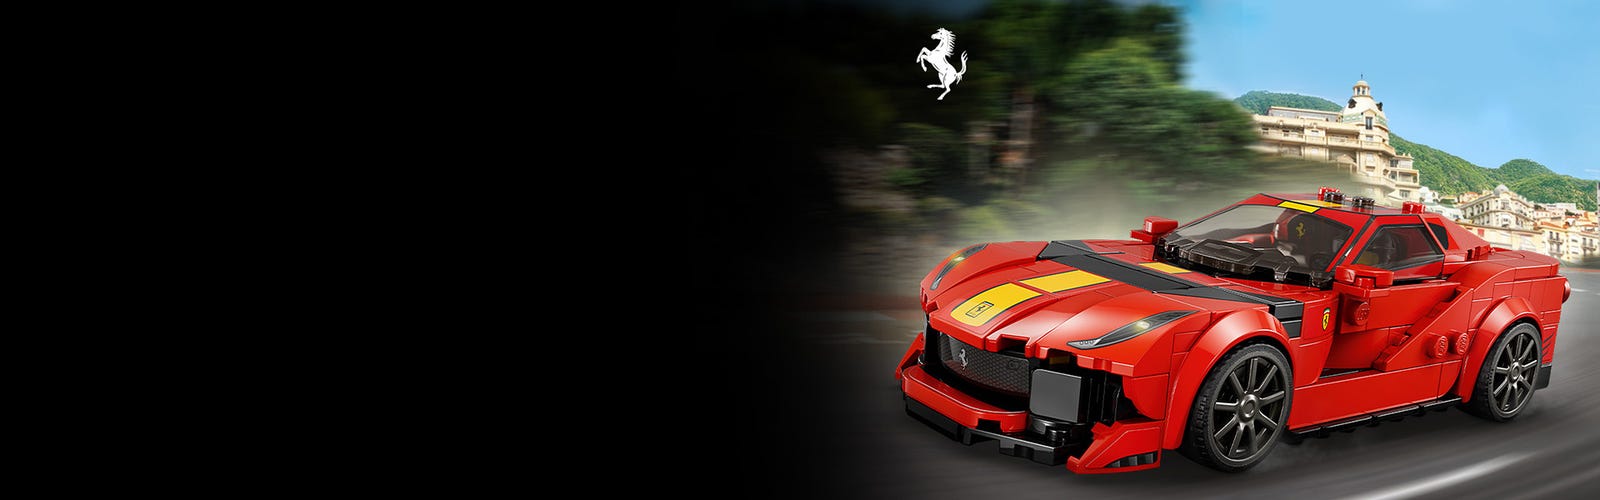 LEGO Speed Champions Ferrari 812 Competizione Set 76914 - US